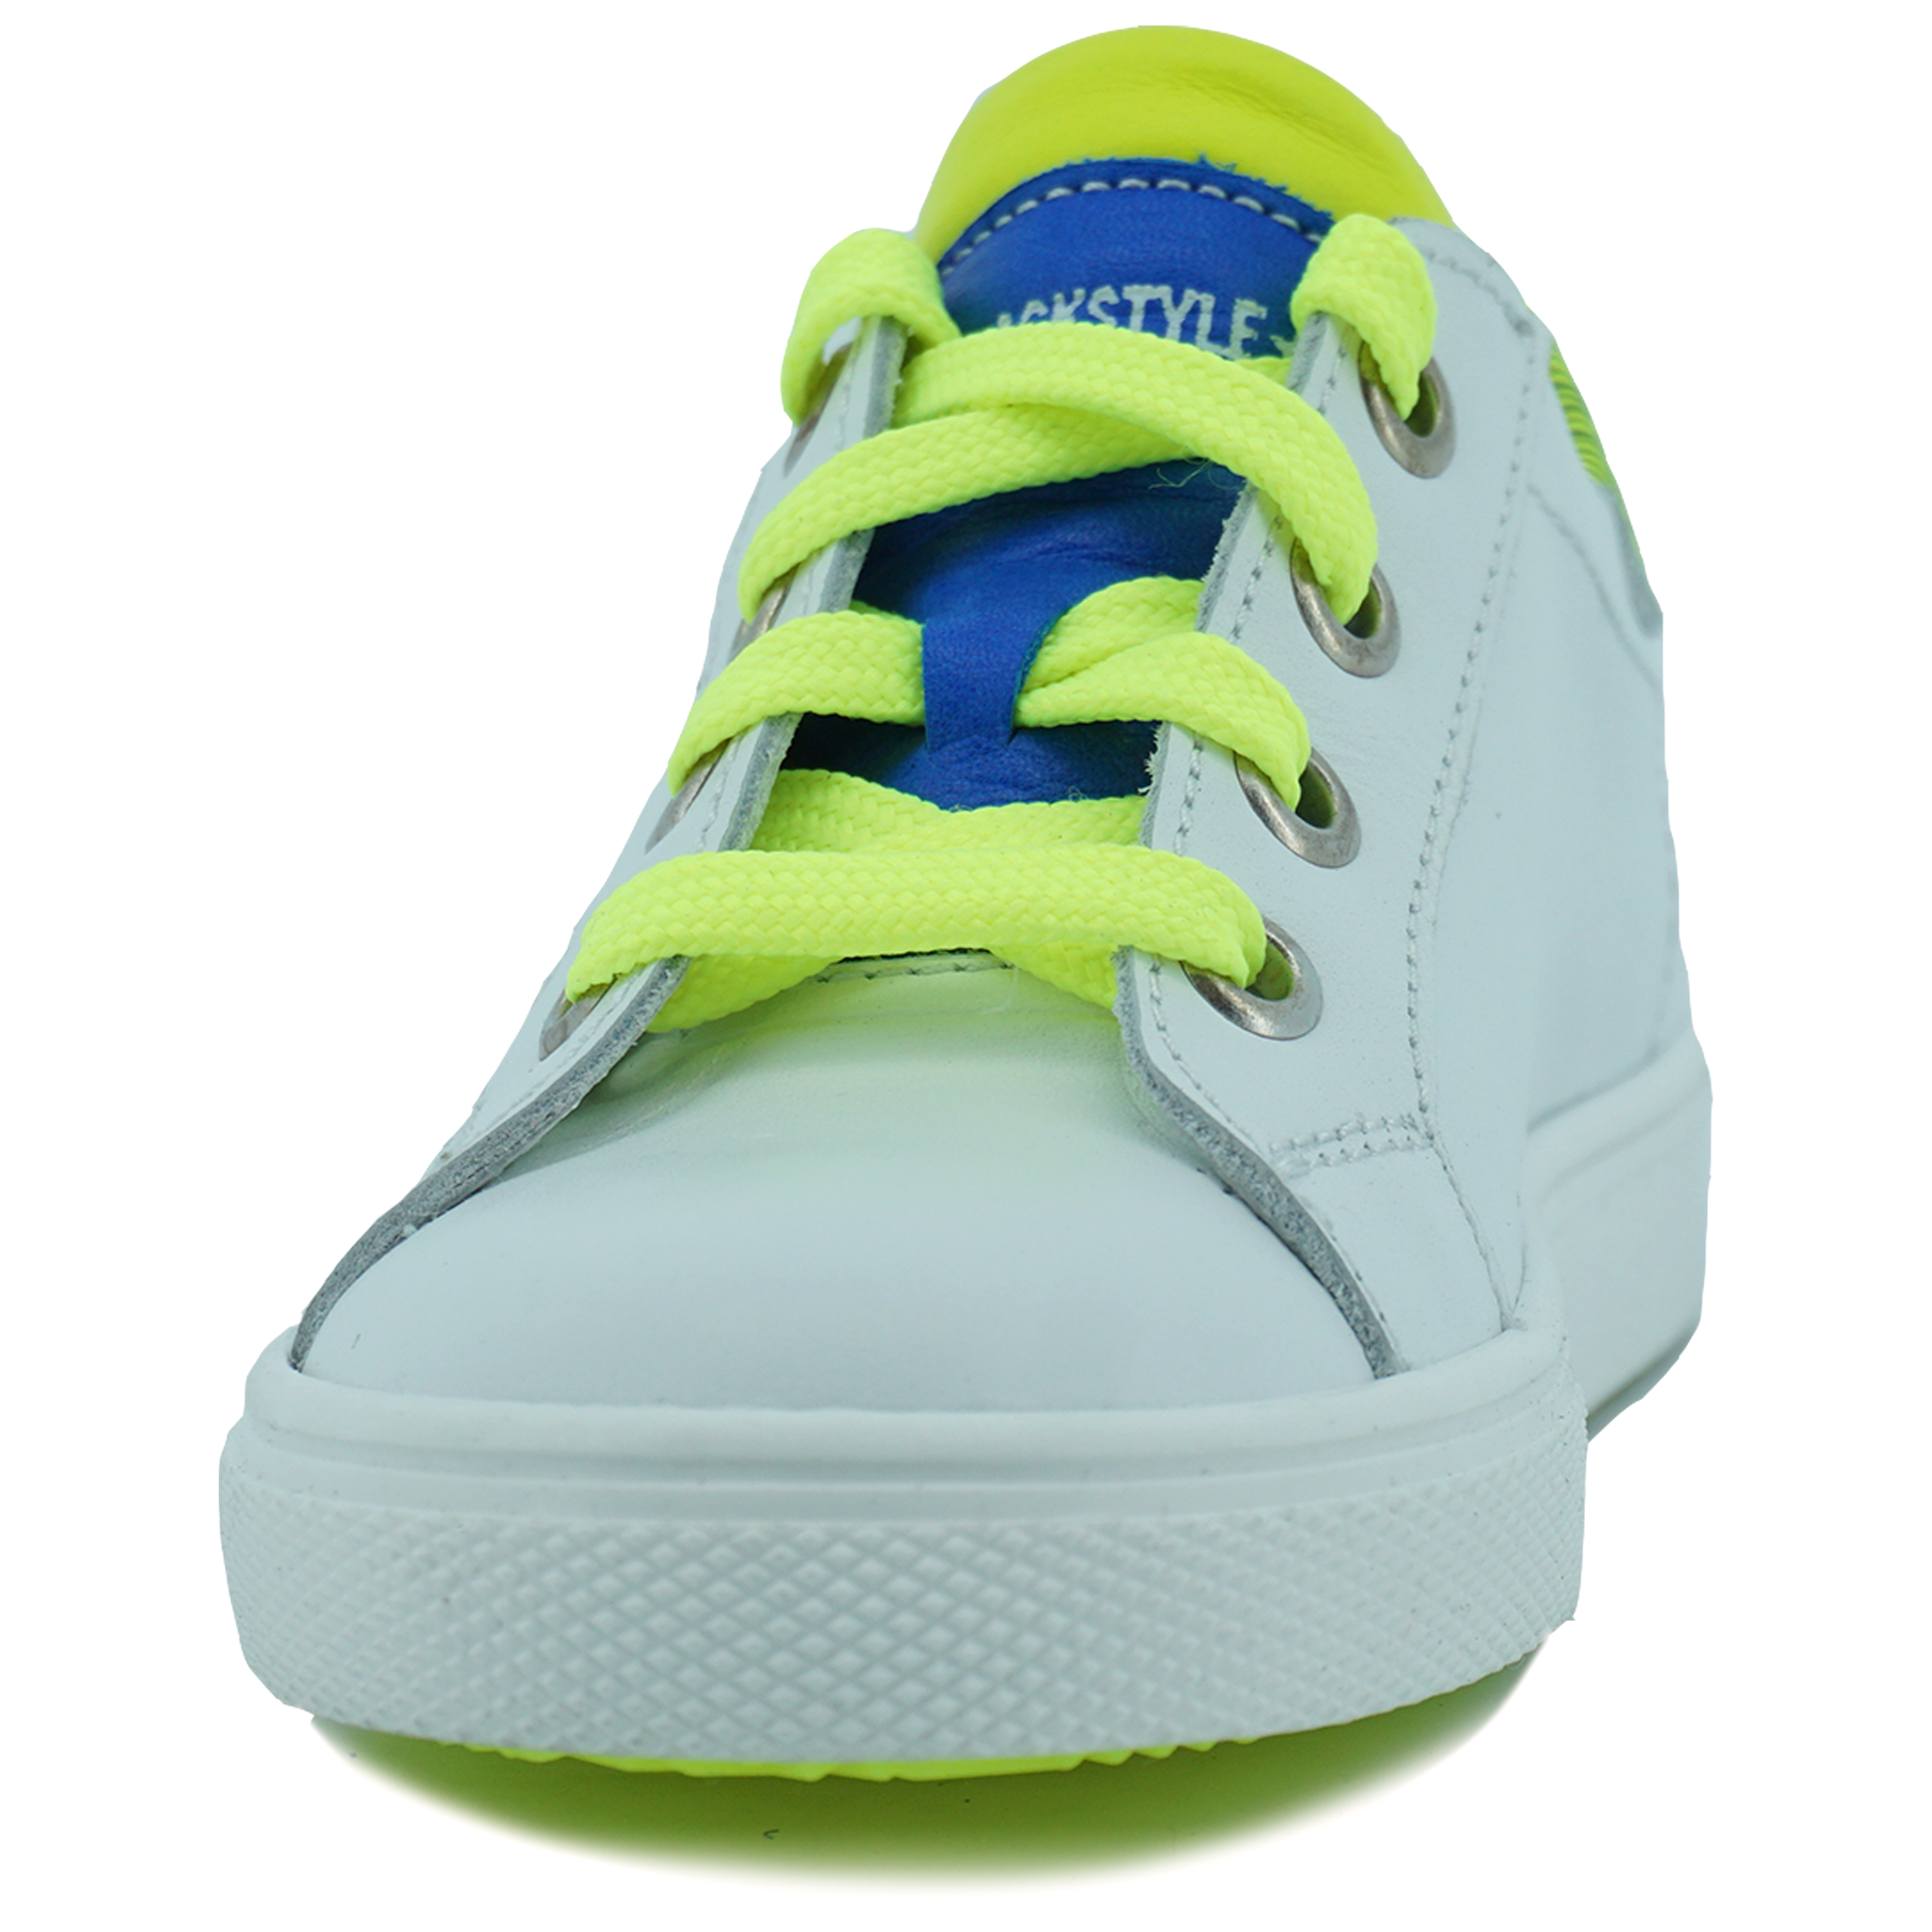 Trackstyle Sneaker white 3.5